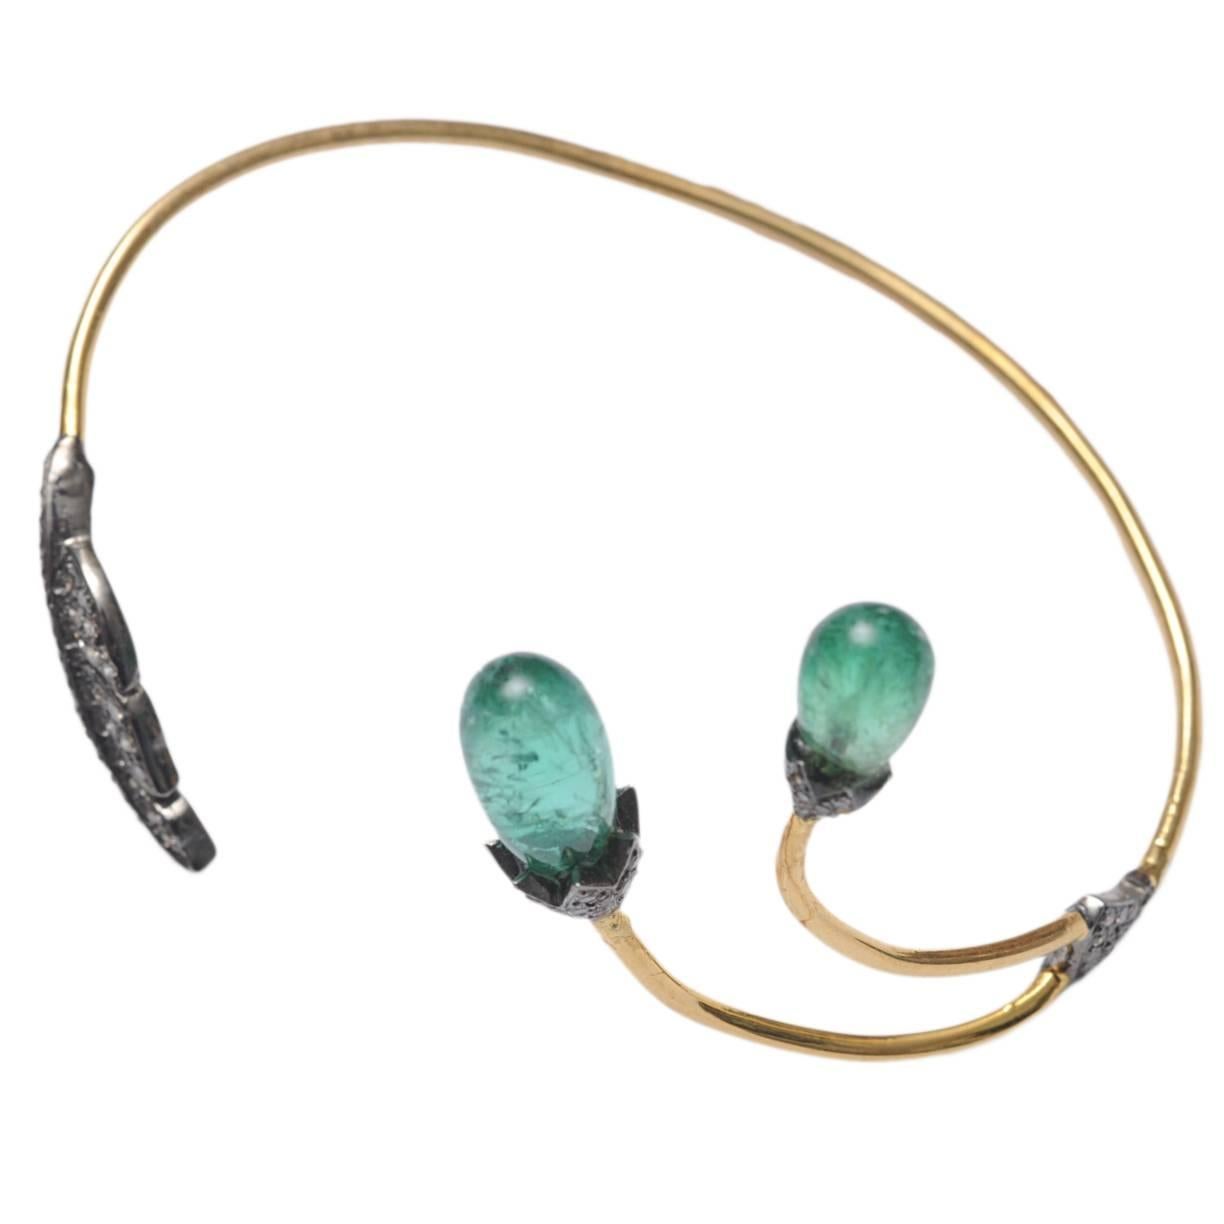 Tumbled Emerald, Pavé Diamond and 18 Karat Gold Wrap Bracelet